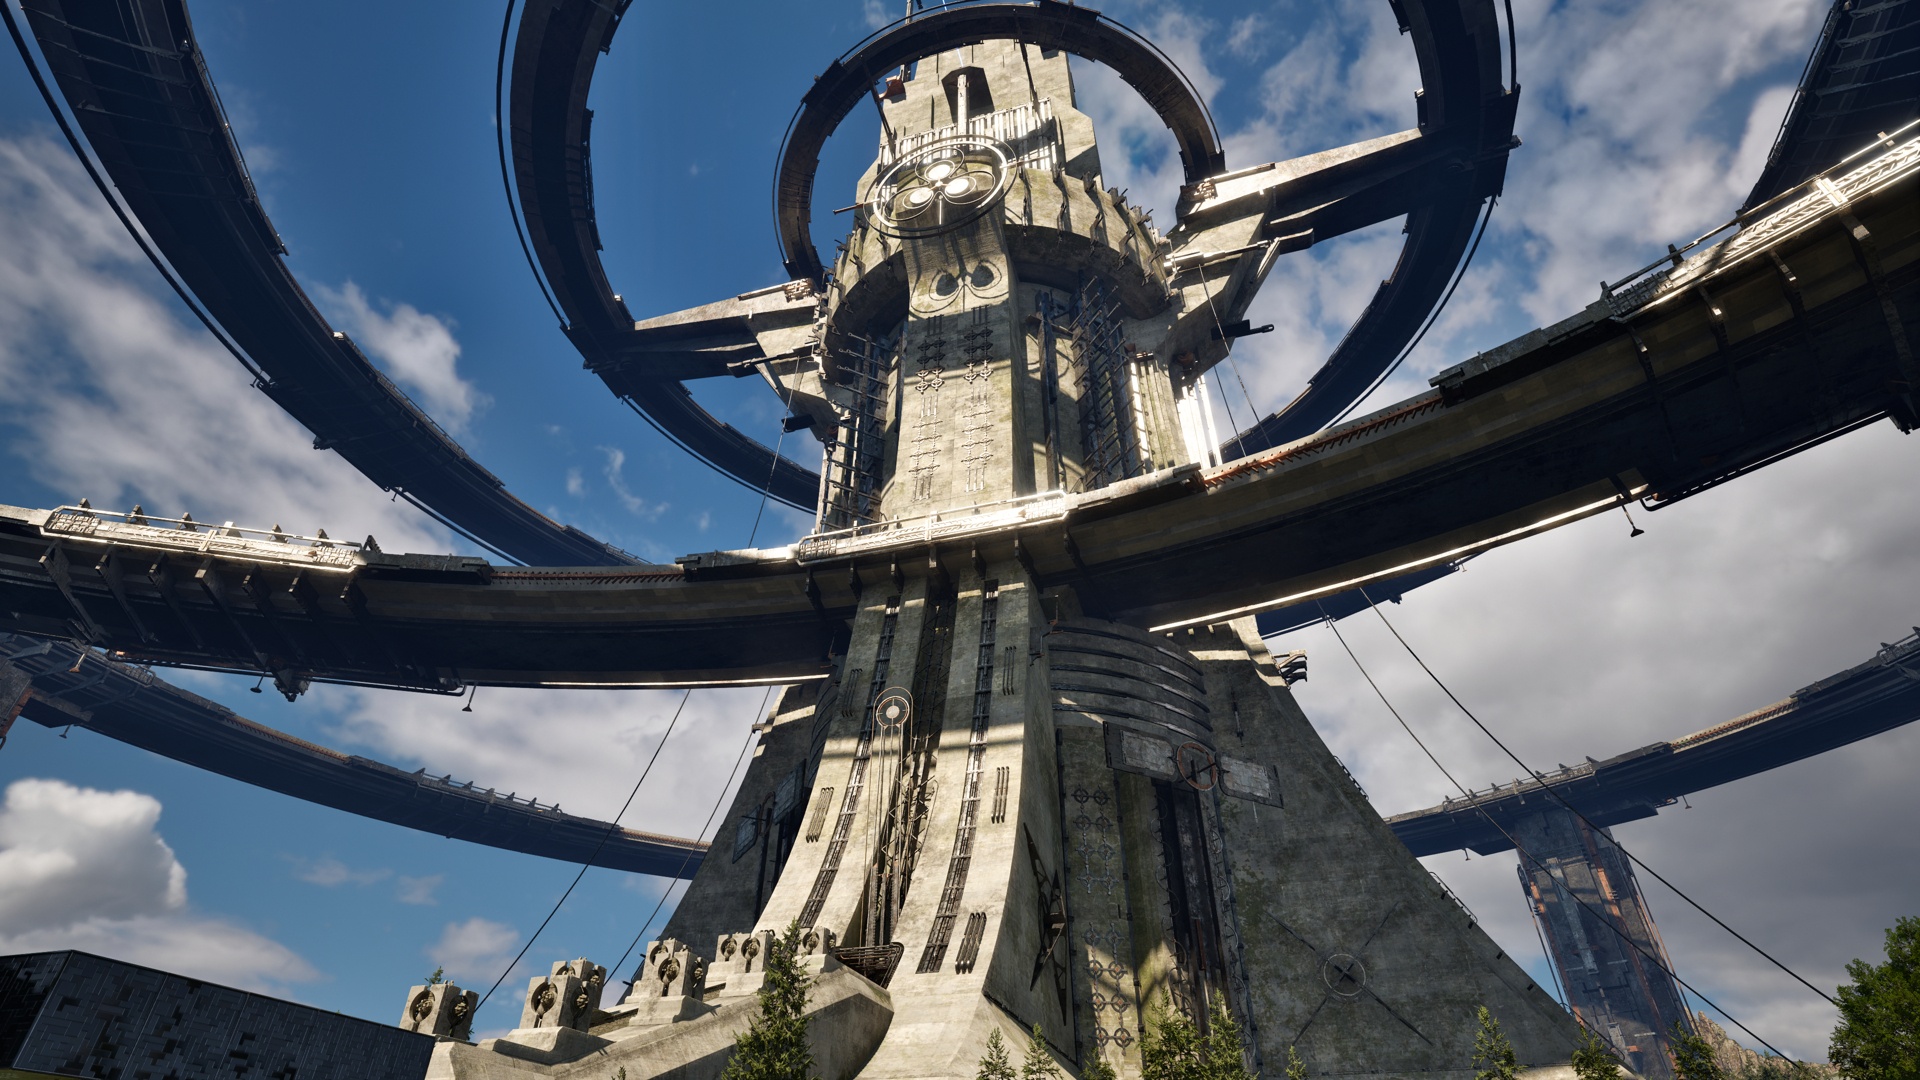 The Talos Principle 2 tower